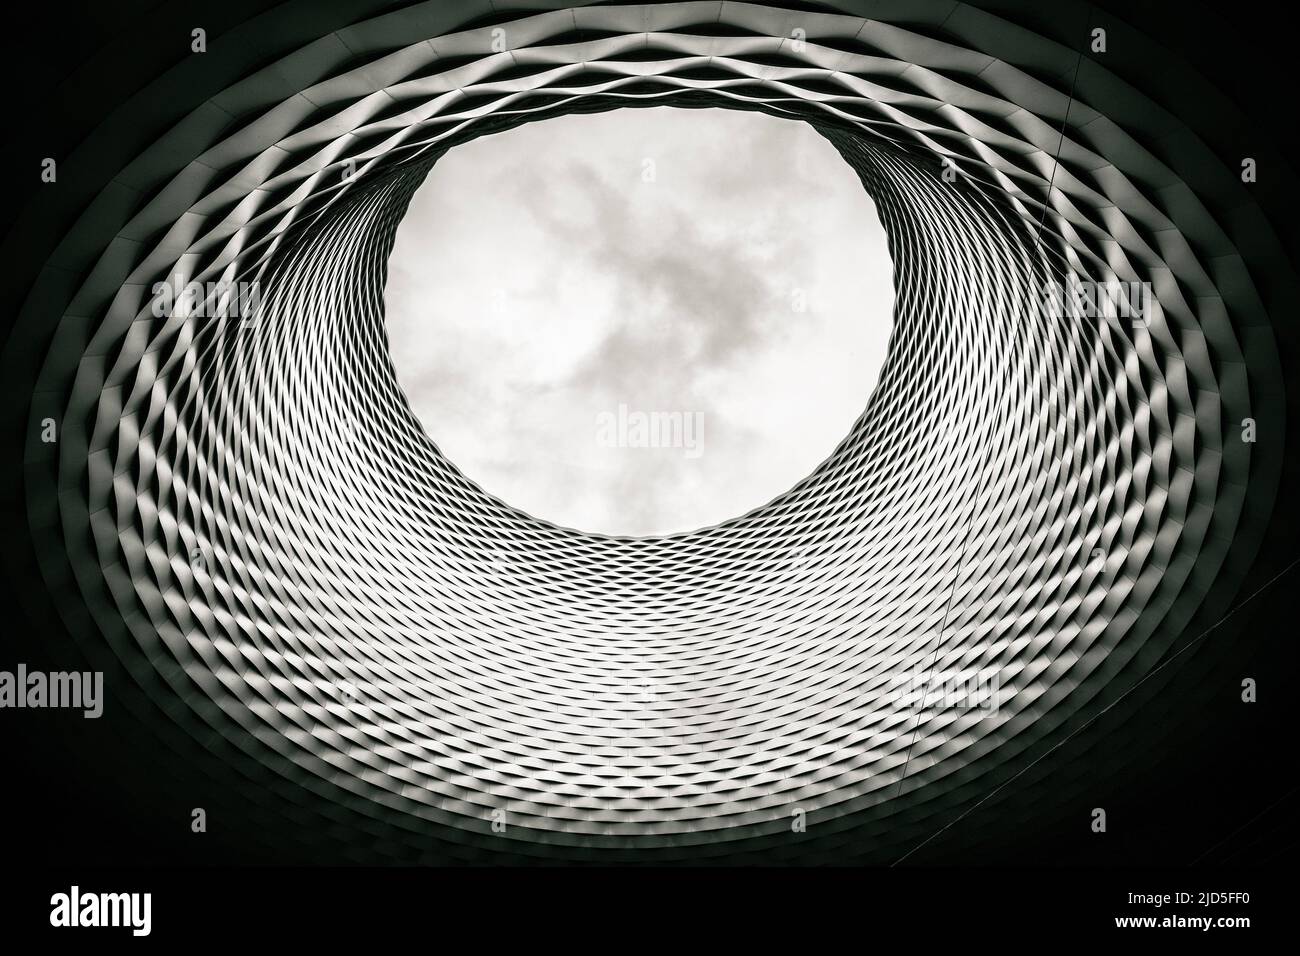 Basel Messe exhibition square aluminium panel facade hole black and white view, Switzerland Stock Photo